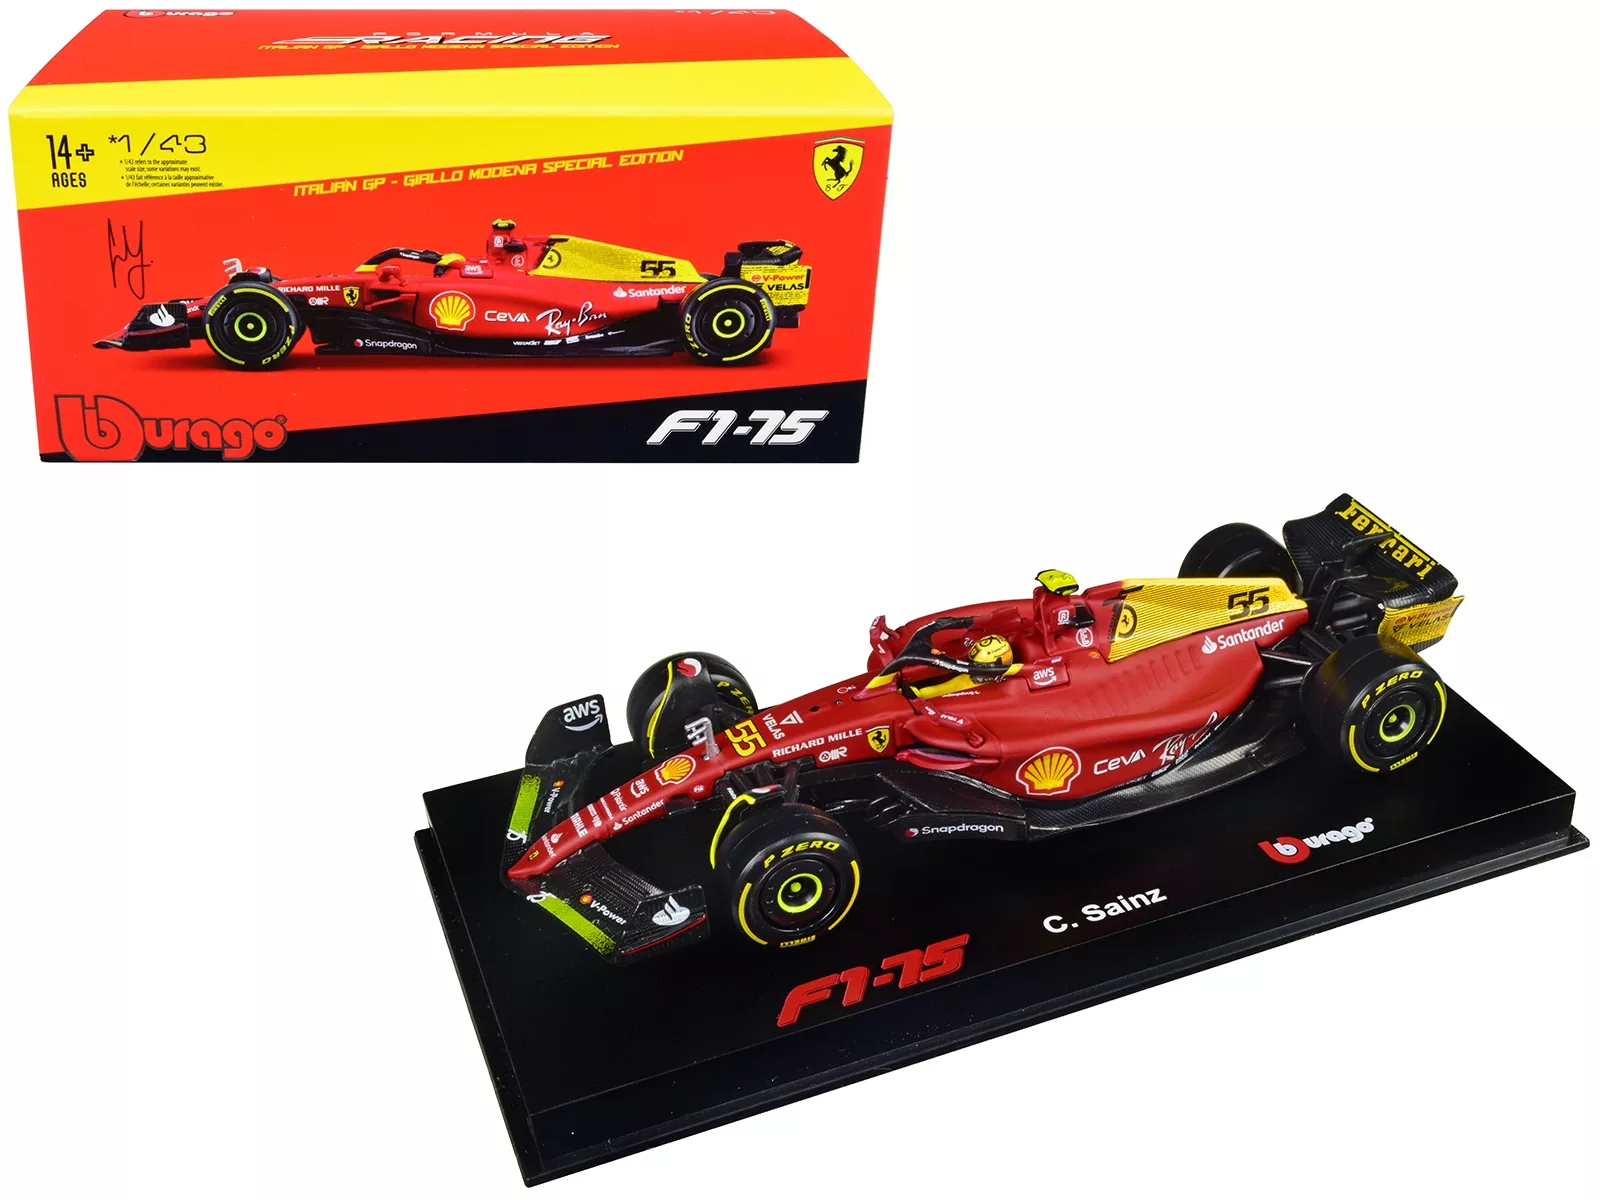 Bburago 1:43 Ferrari collection yellow Alloy Racing Convertible alloy car  model simulation car decoration collection gift toy